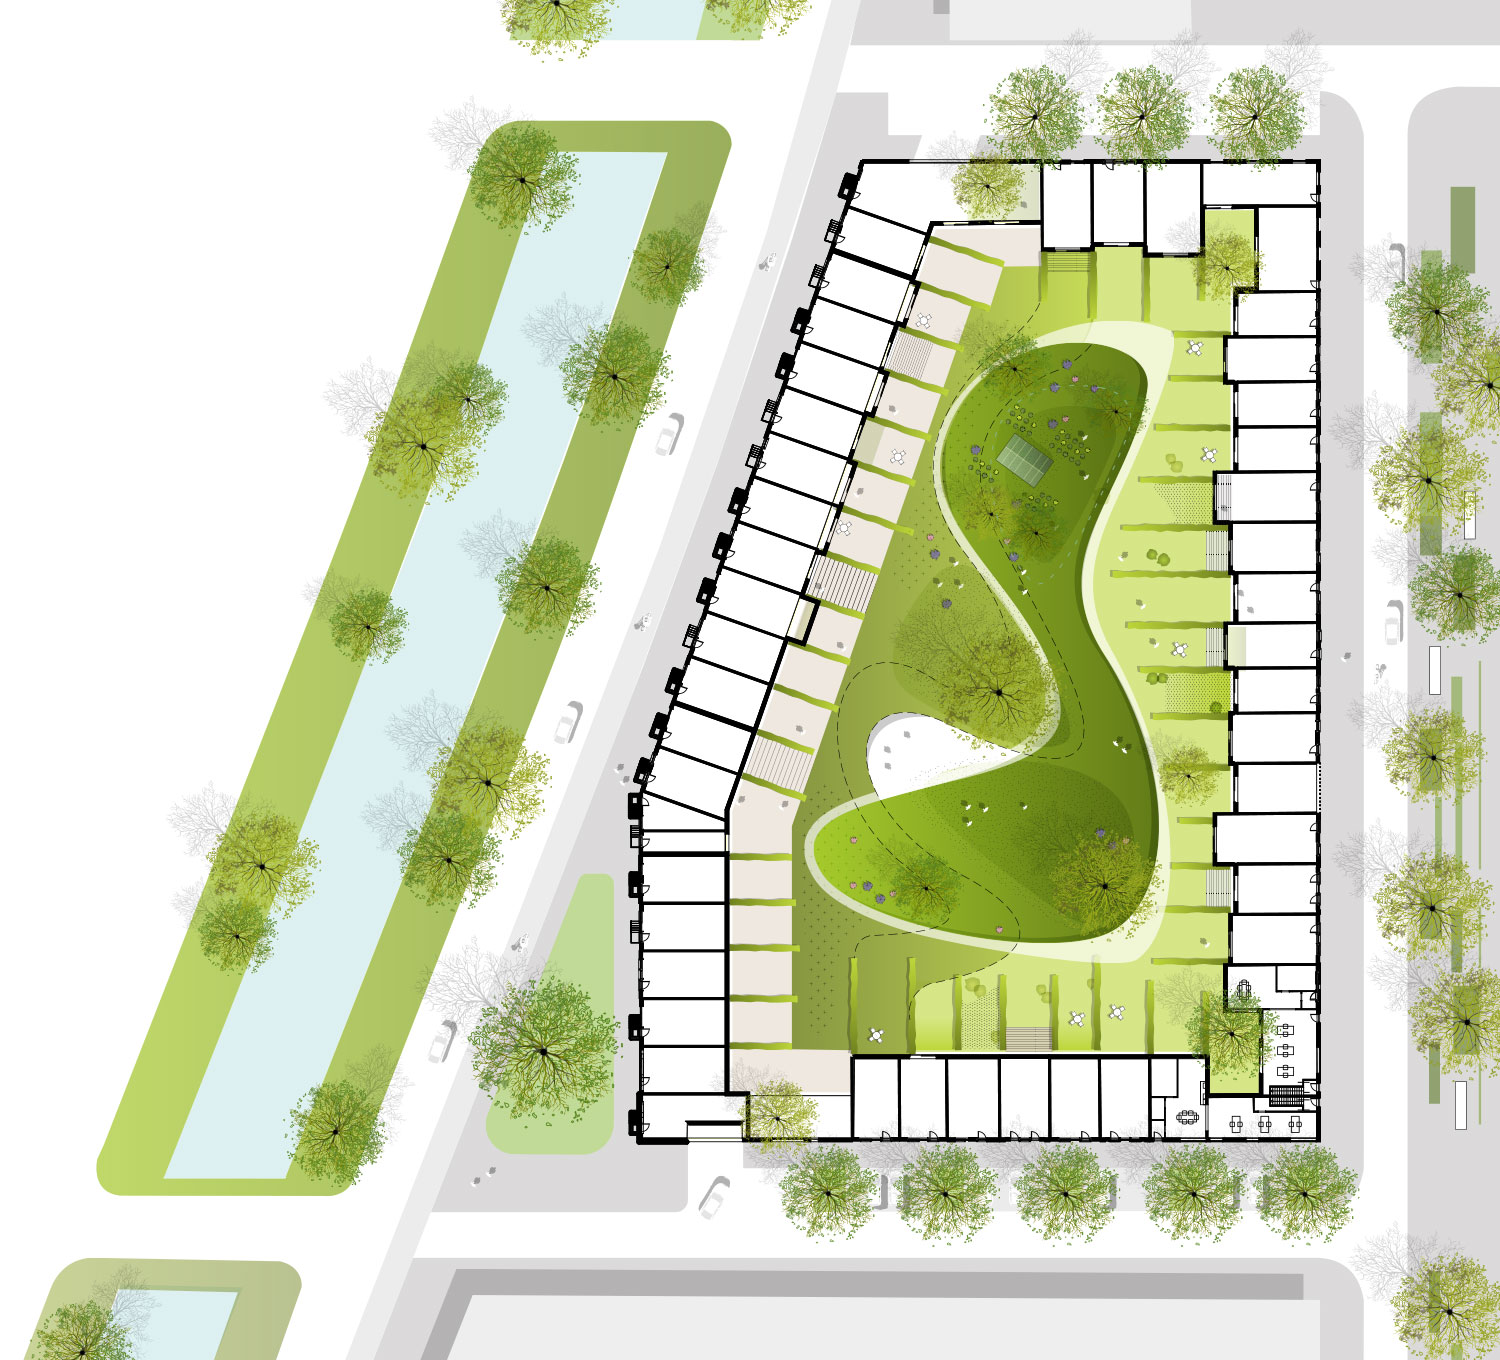 DELVA-Landscape-architects-deeltuin-veemarkt-era-contour-heren-5-deeleconomie-binnentuin-synchroon-amsterdam-antwerpen-steven-5